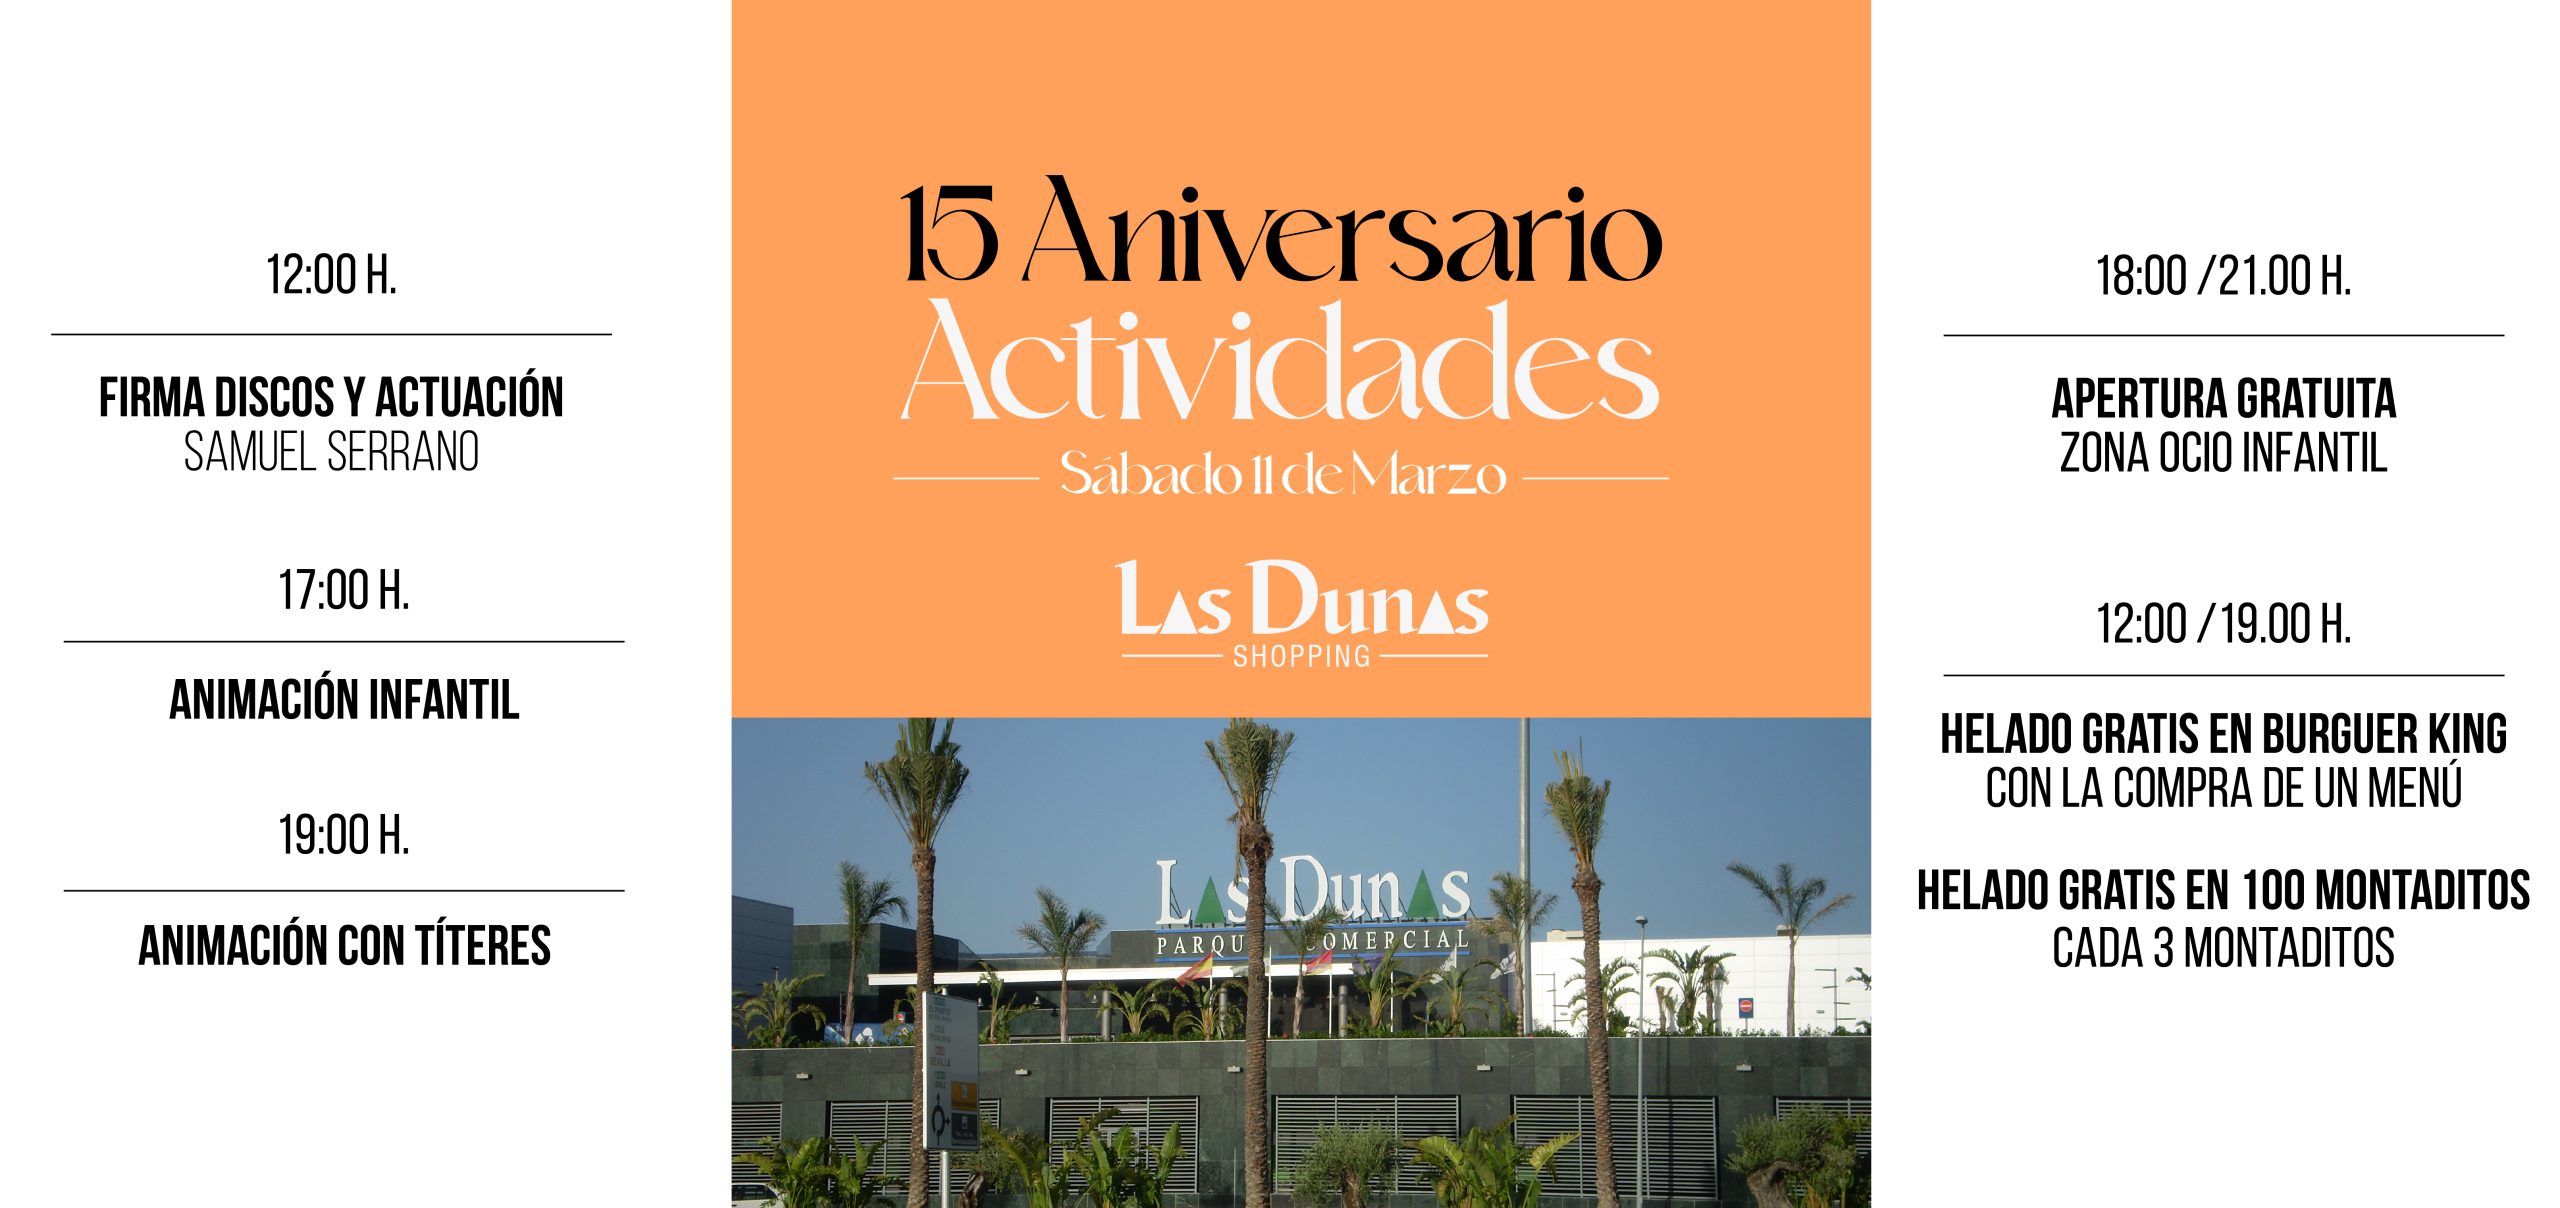 15 Aniversario Las Dunas Shopping